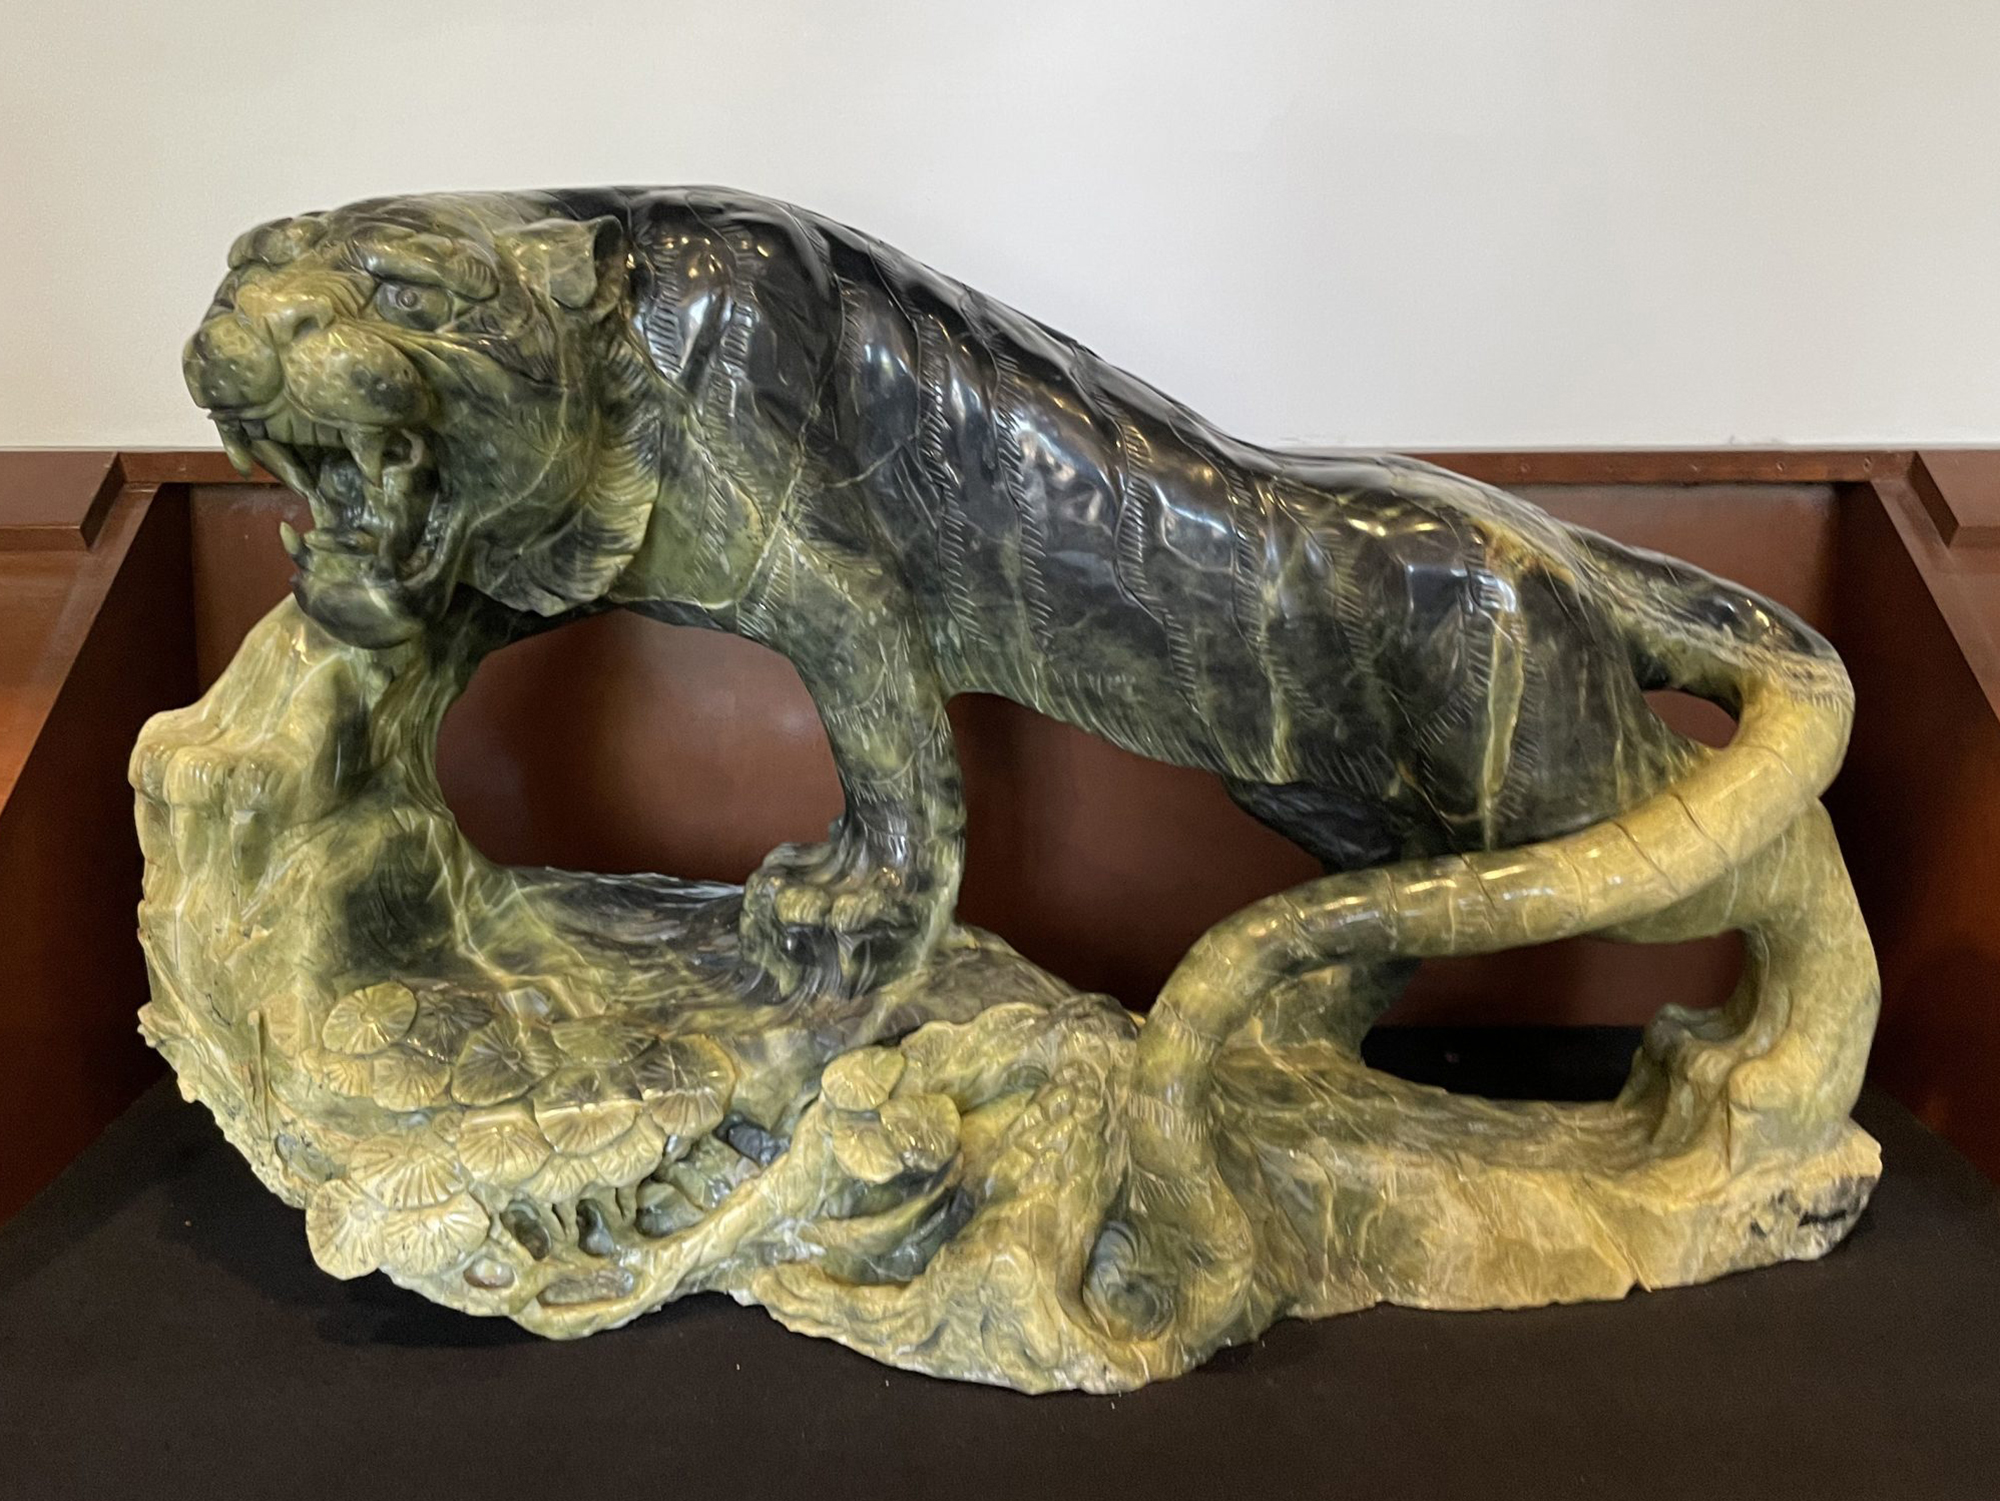 Tiger sculpture made of jade